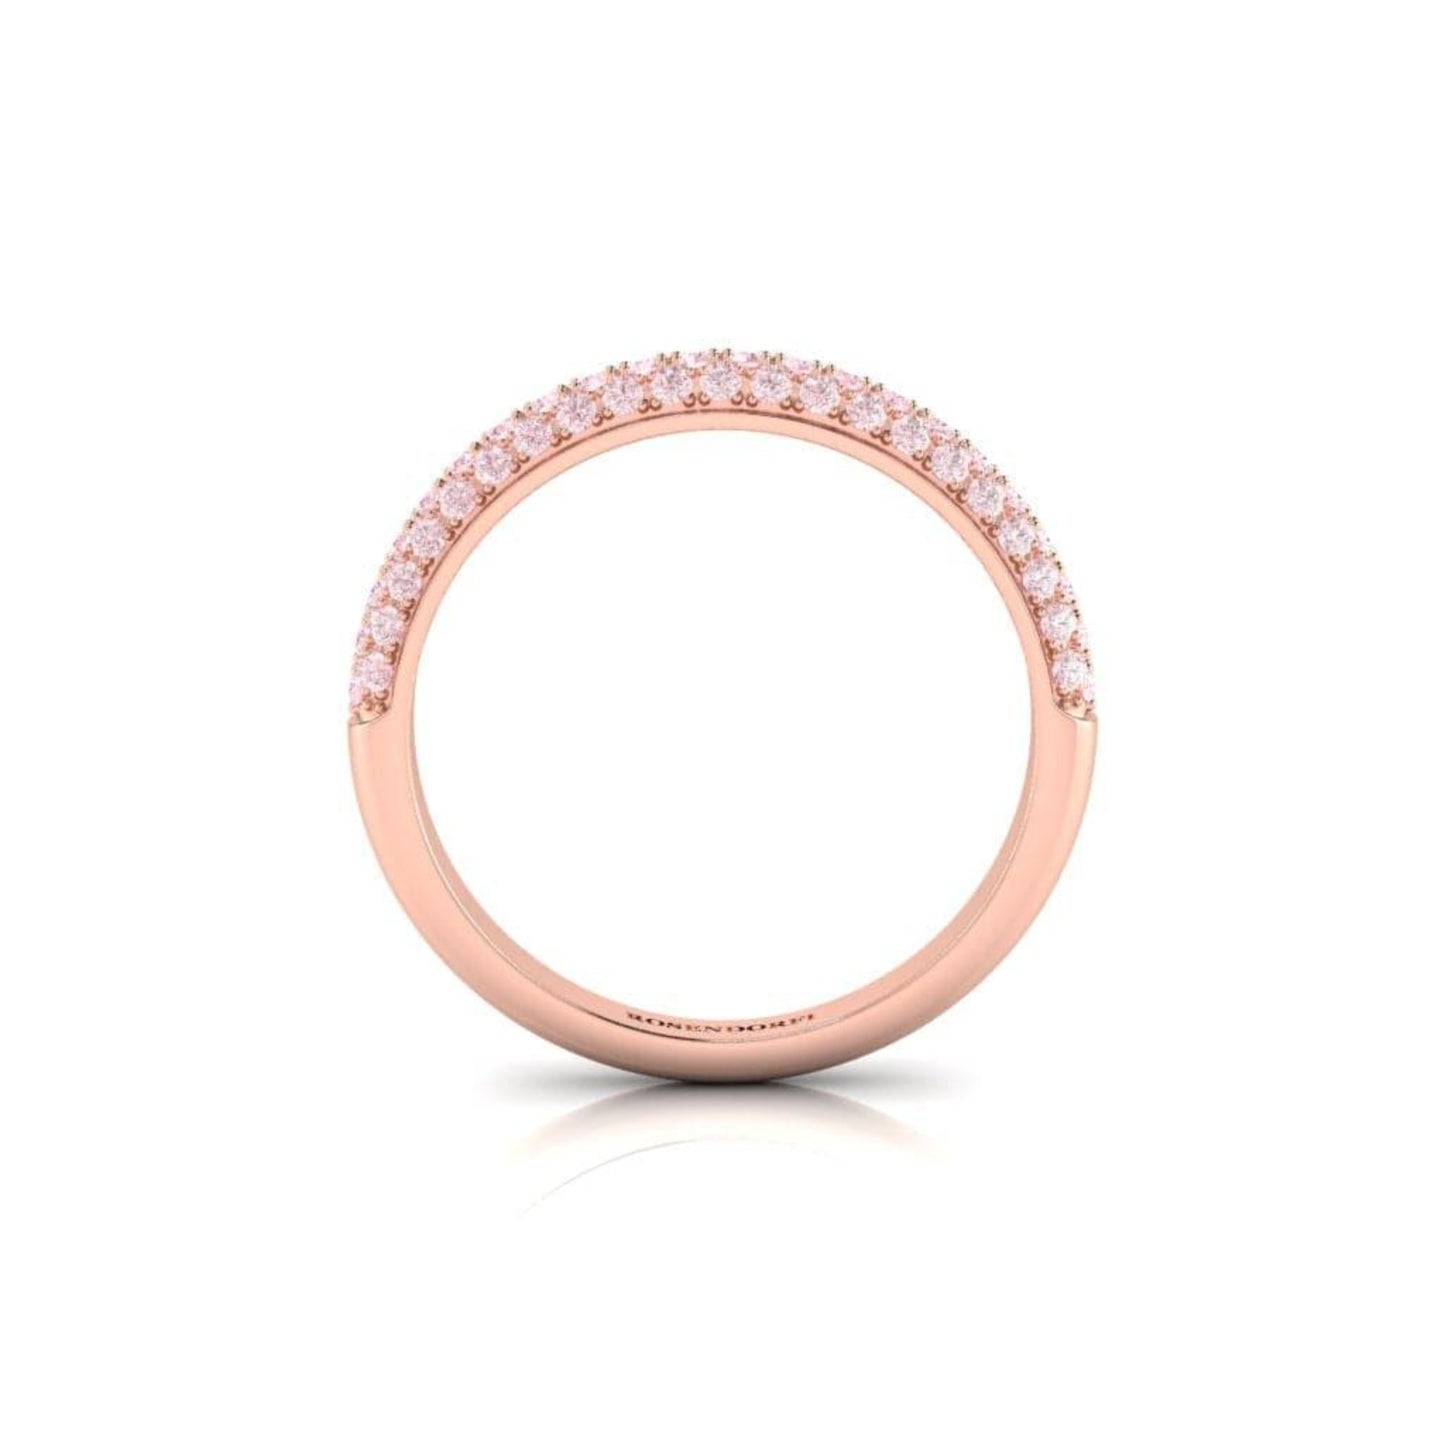 Eminence Pinks Micro Pave Ring - Rosendorff Diamond Jewellers